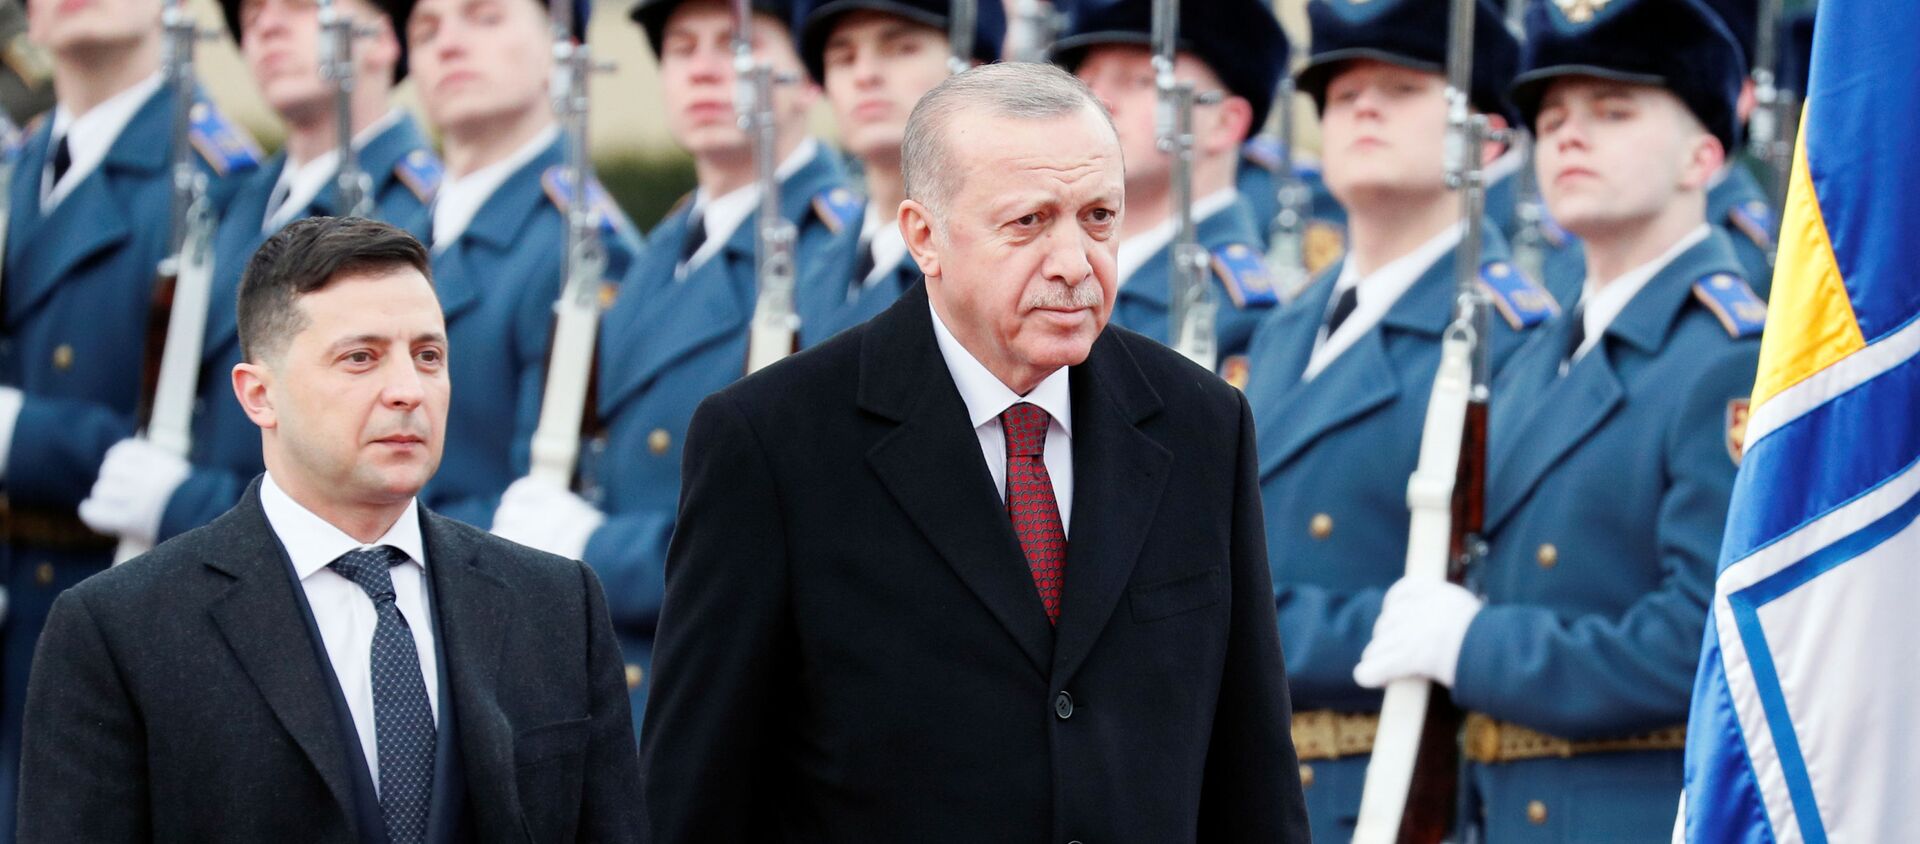 El presidente de Ucrania, Volodímir Zelenski, junto a su homólogo turco, Recep Tayyip Erdogan - Sputnik Mundo, 1920, 03.02.2020